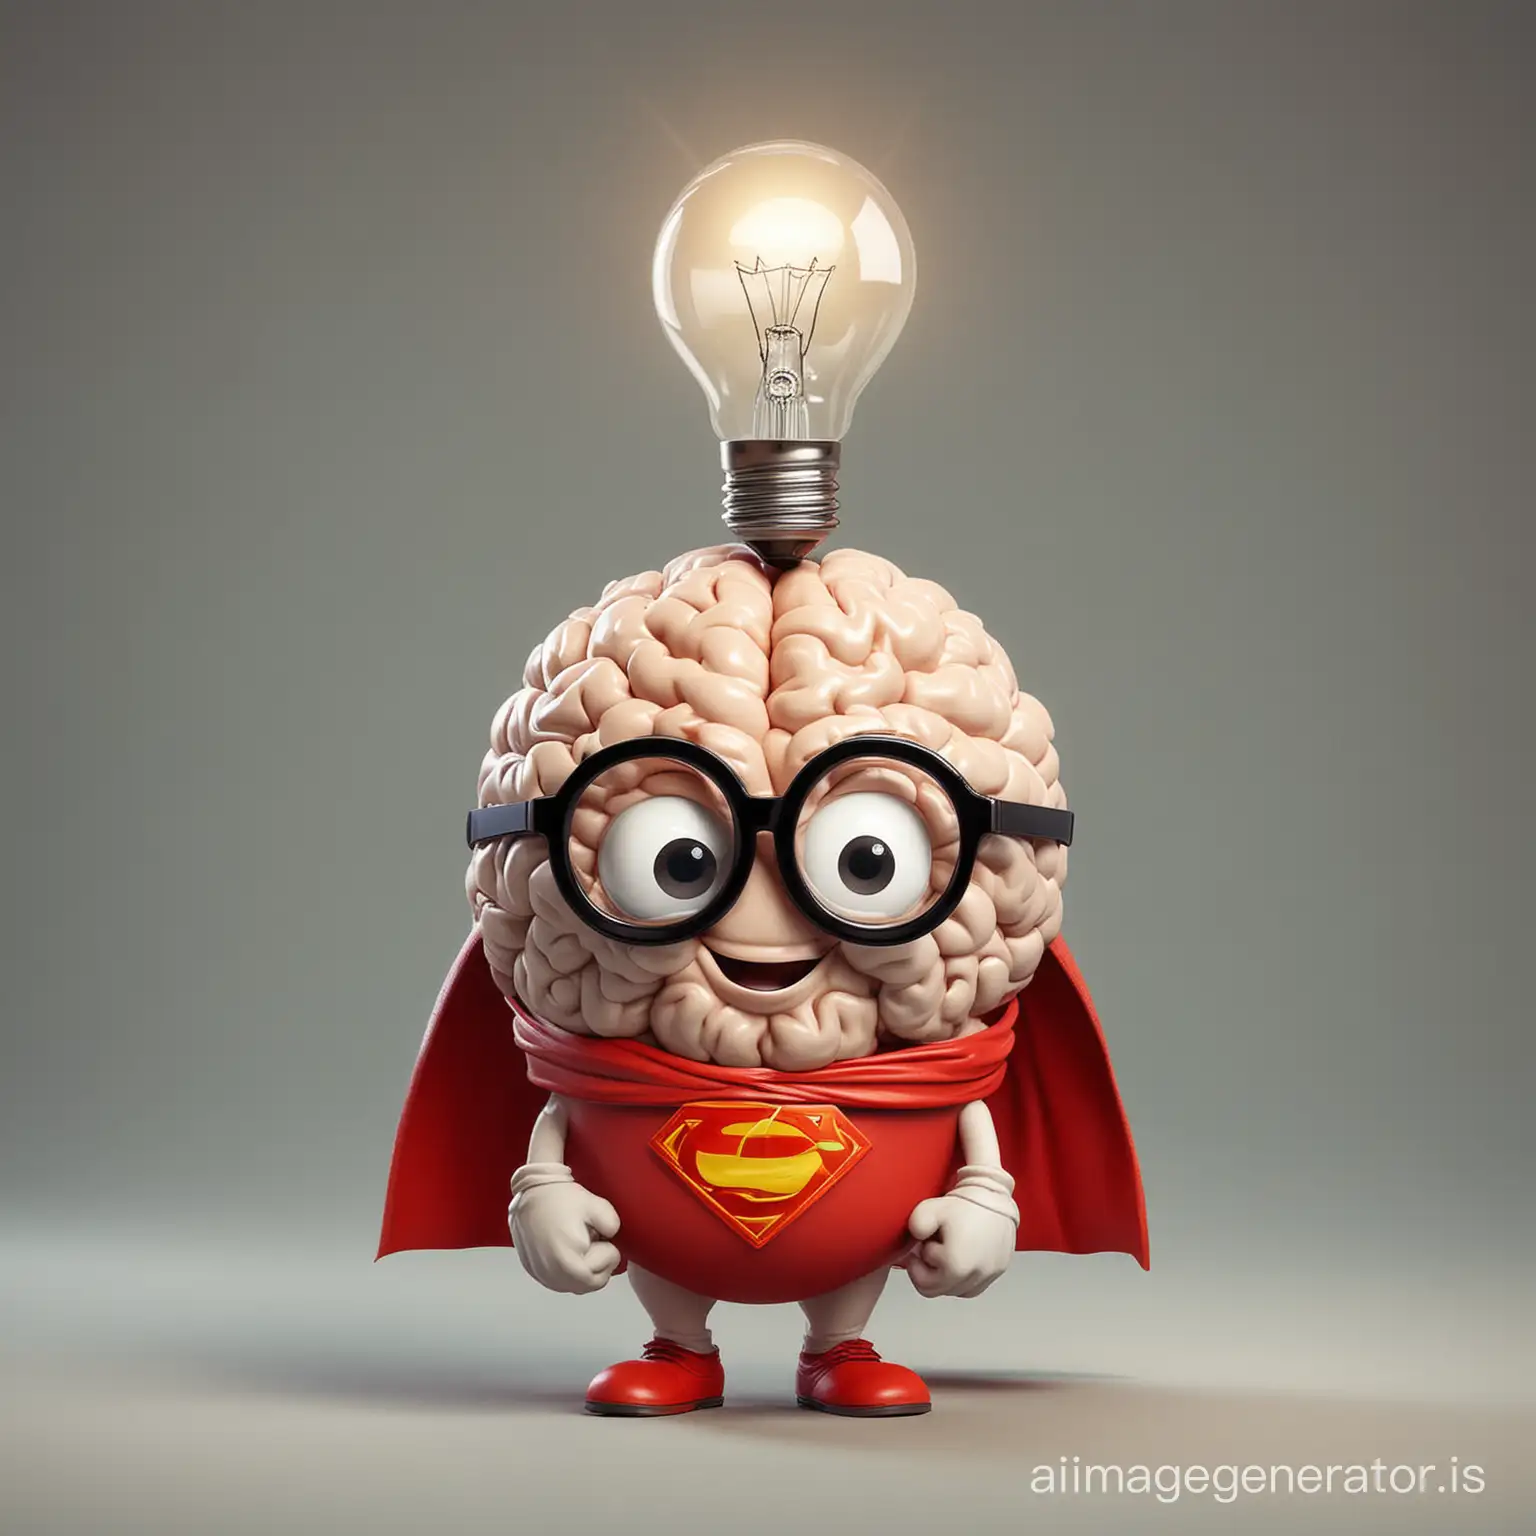 Cheerful-Superhero-Brain-with-Glasses-and-Lightbulb-Cap